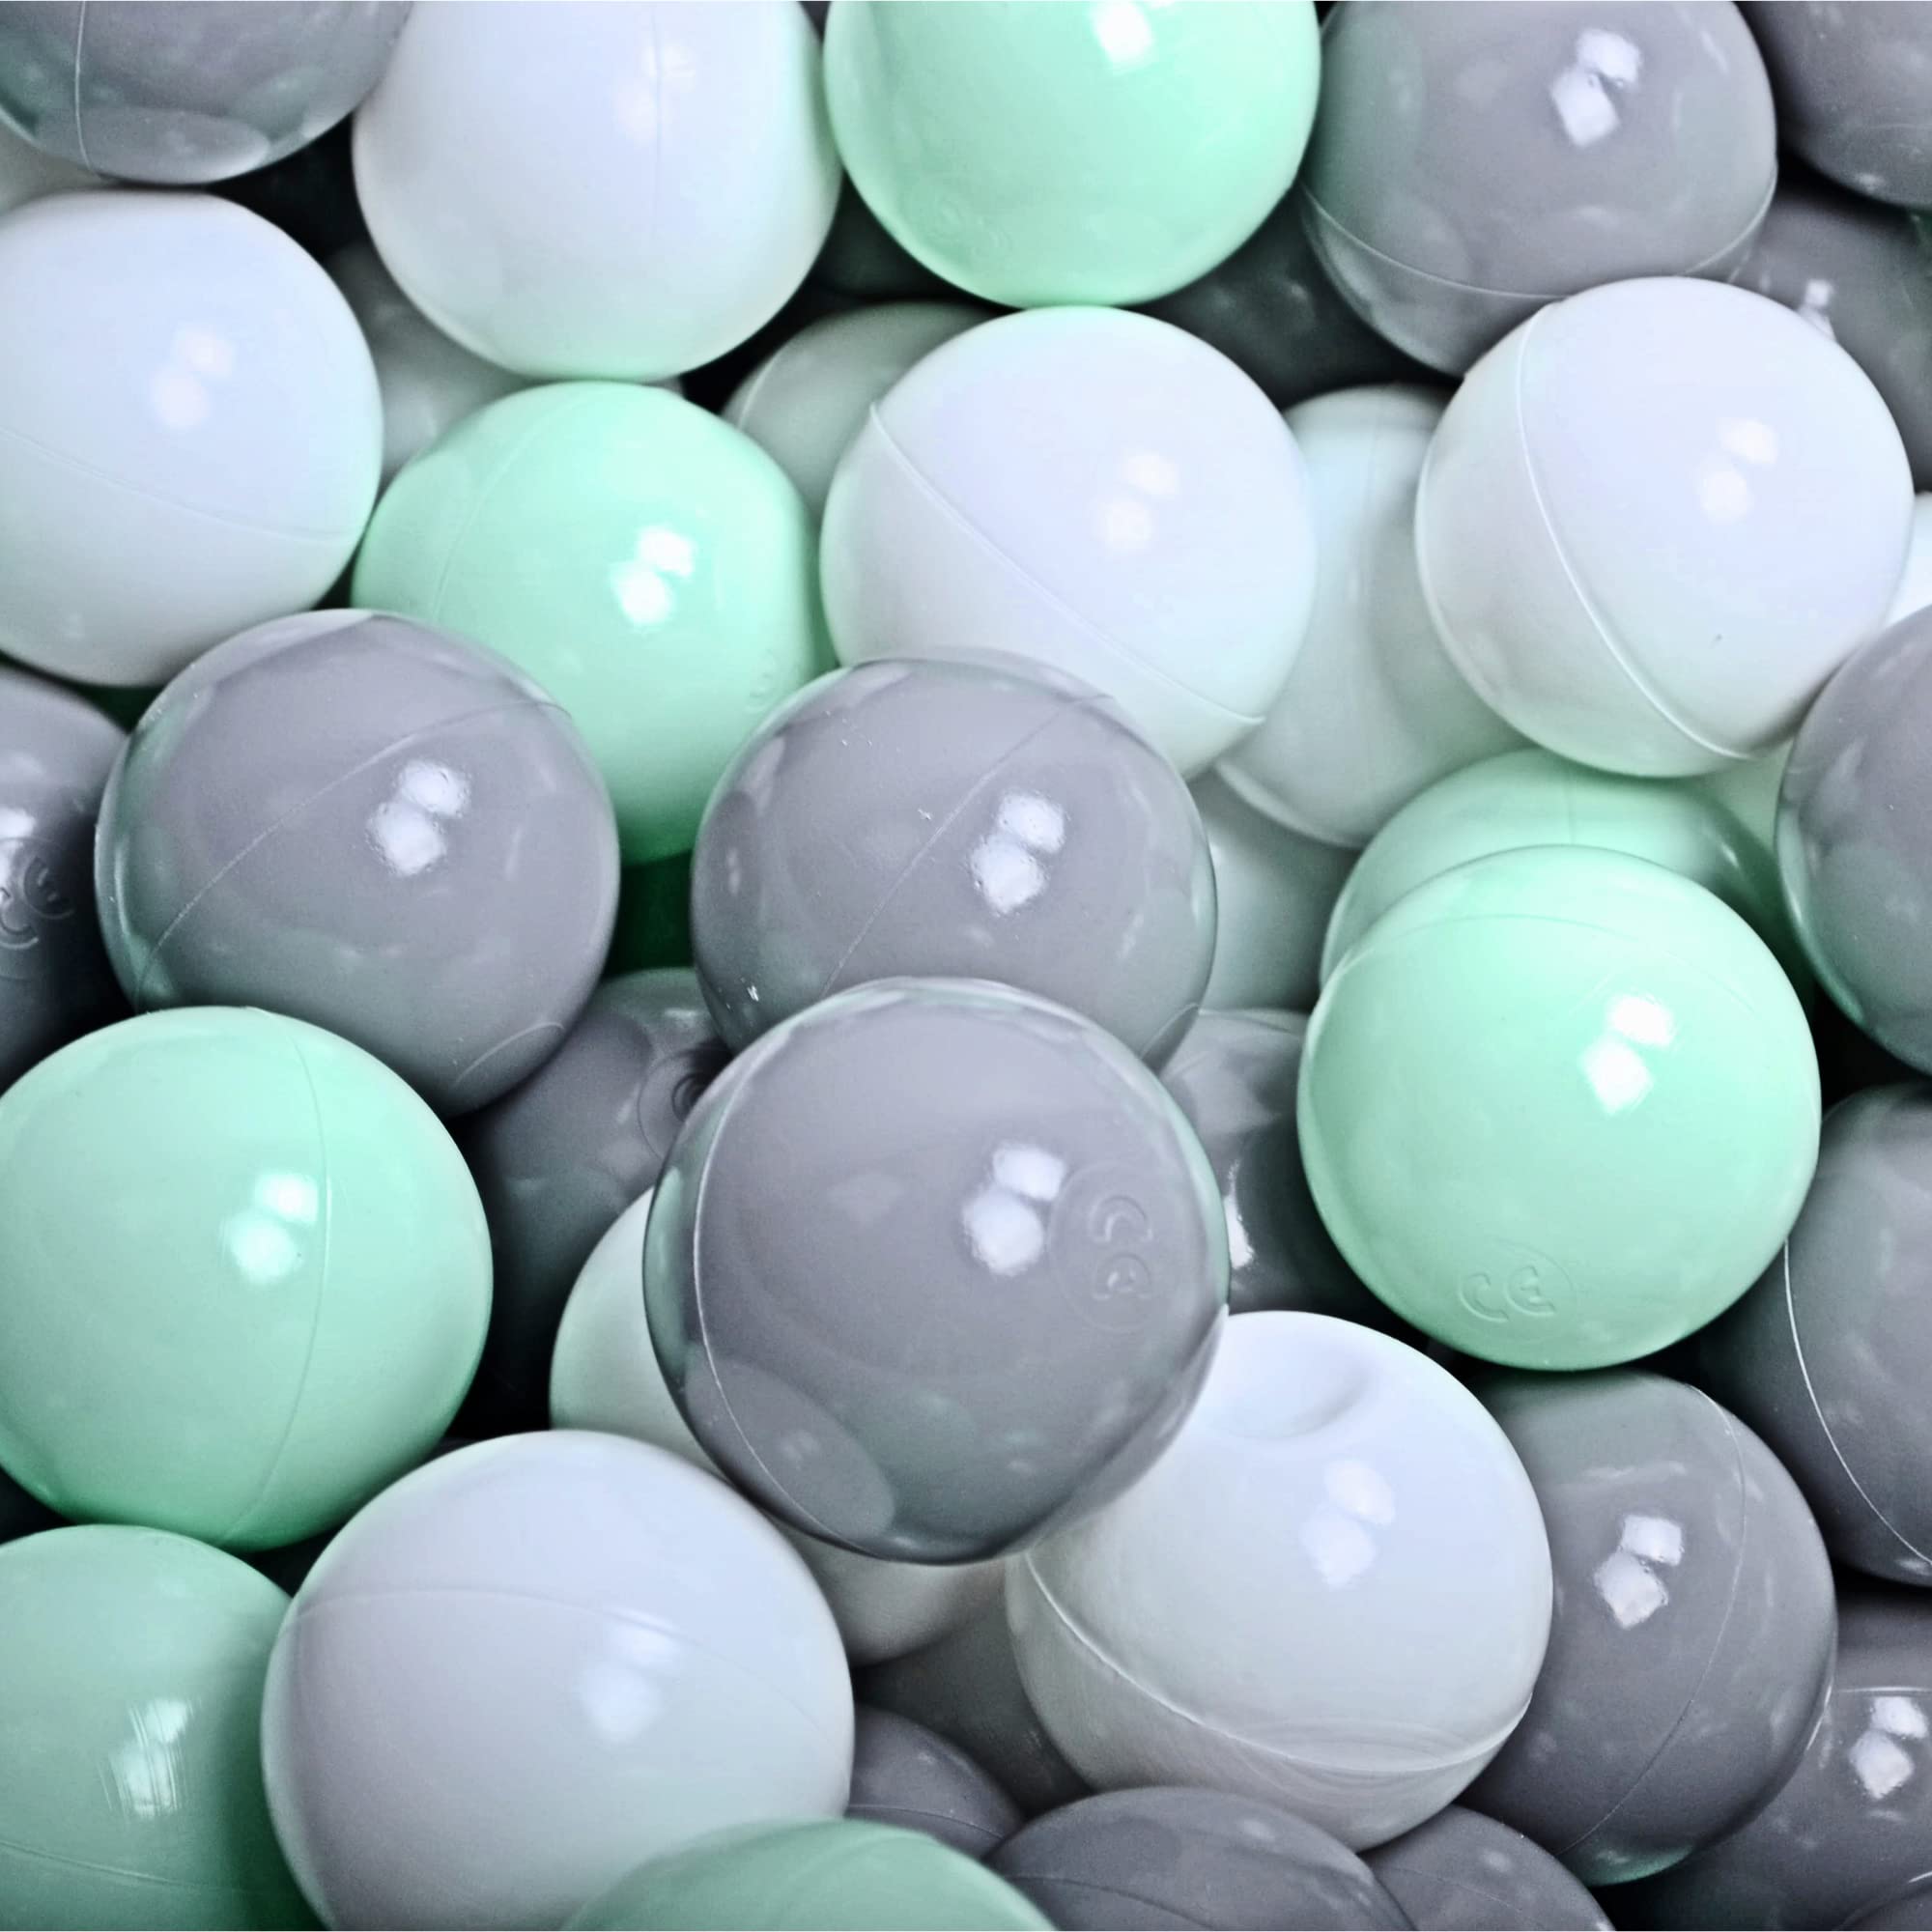 MEOWBABY 300 ∅ 7Cm Kinder Bälle Spielbälle Für Bällebad Baby Plastikbälle Ball Pit Kugelbad Bällchenbad Made In EU Mint/Weiß/Grau